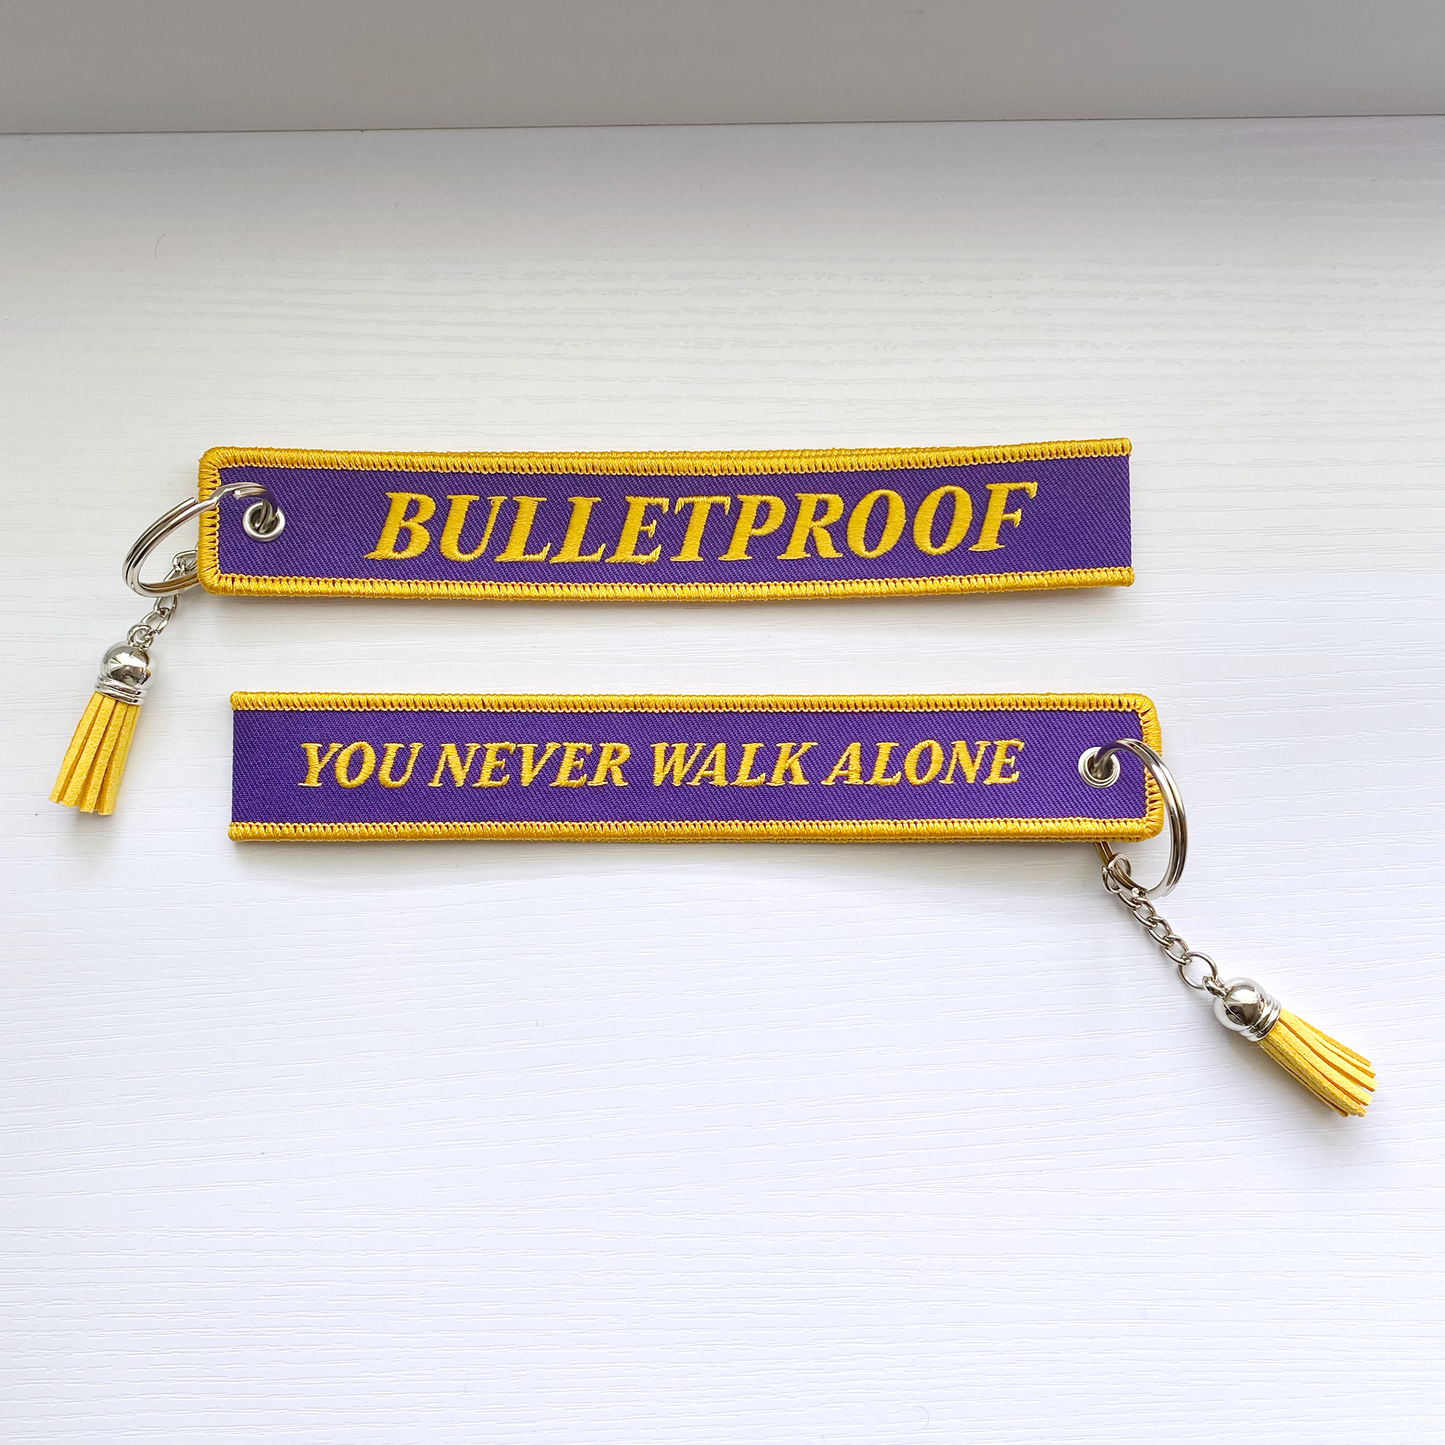 BTS Inspired "Bulletproof" Embroidered Keychain Wristlet